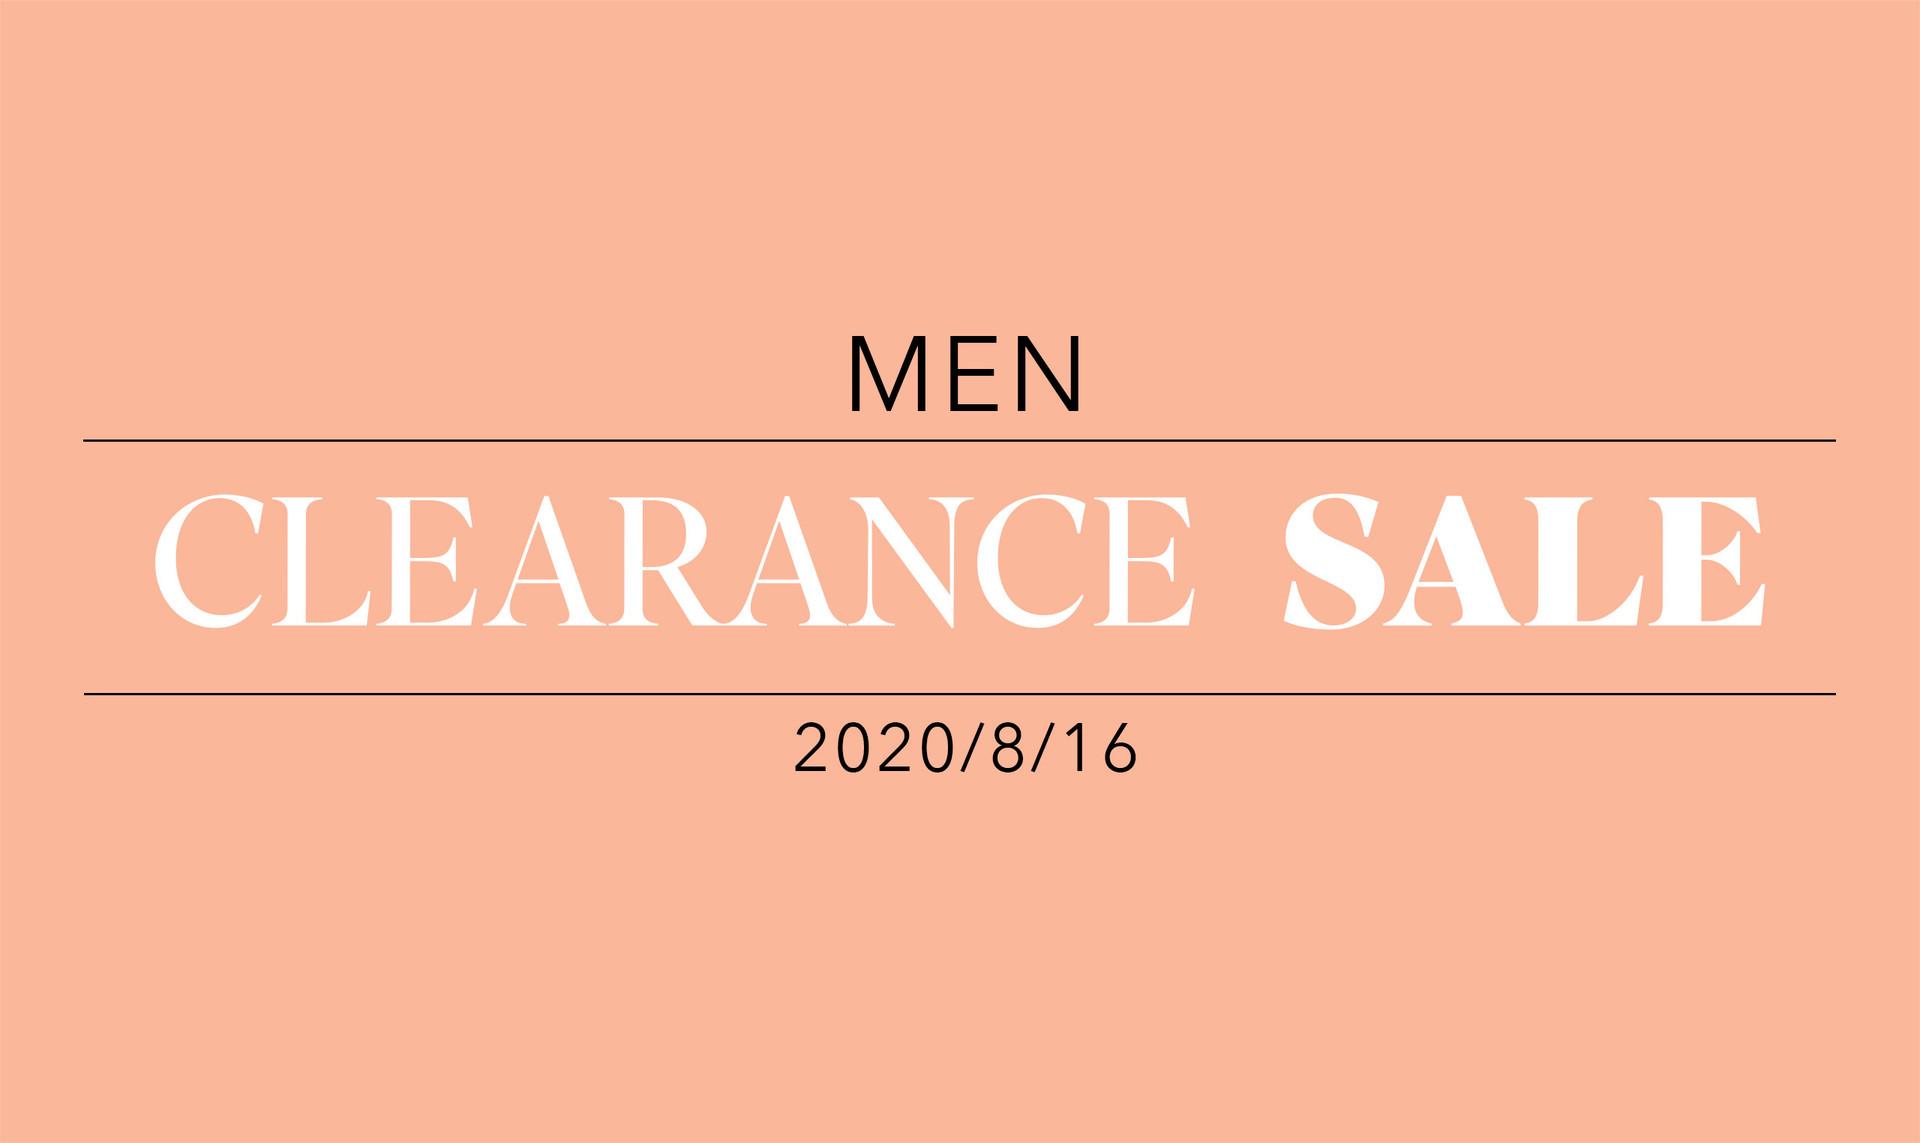 Clearance sale : Men